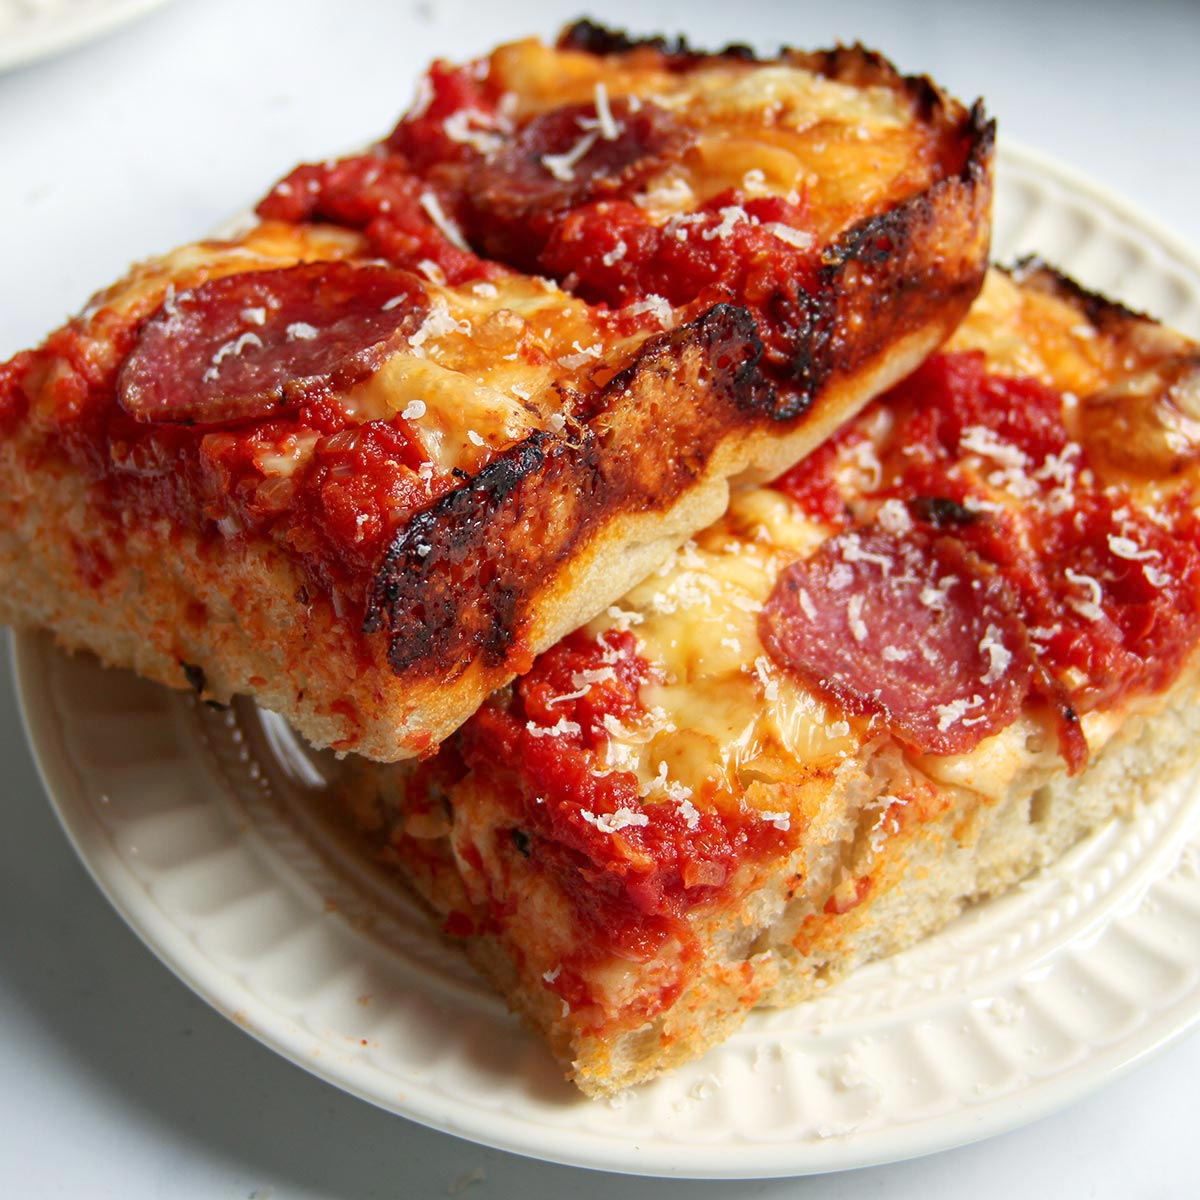 Detroit Pizza: dicker Boden, knuspriger Rand